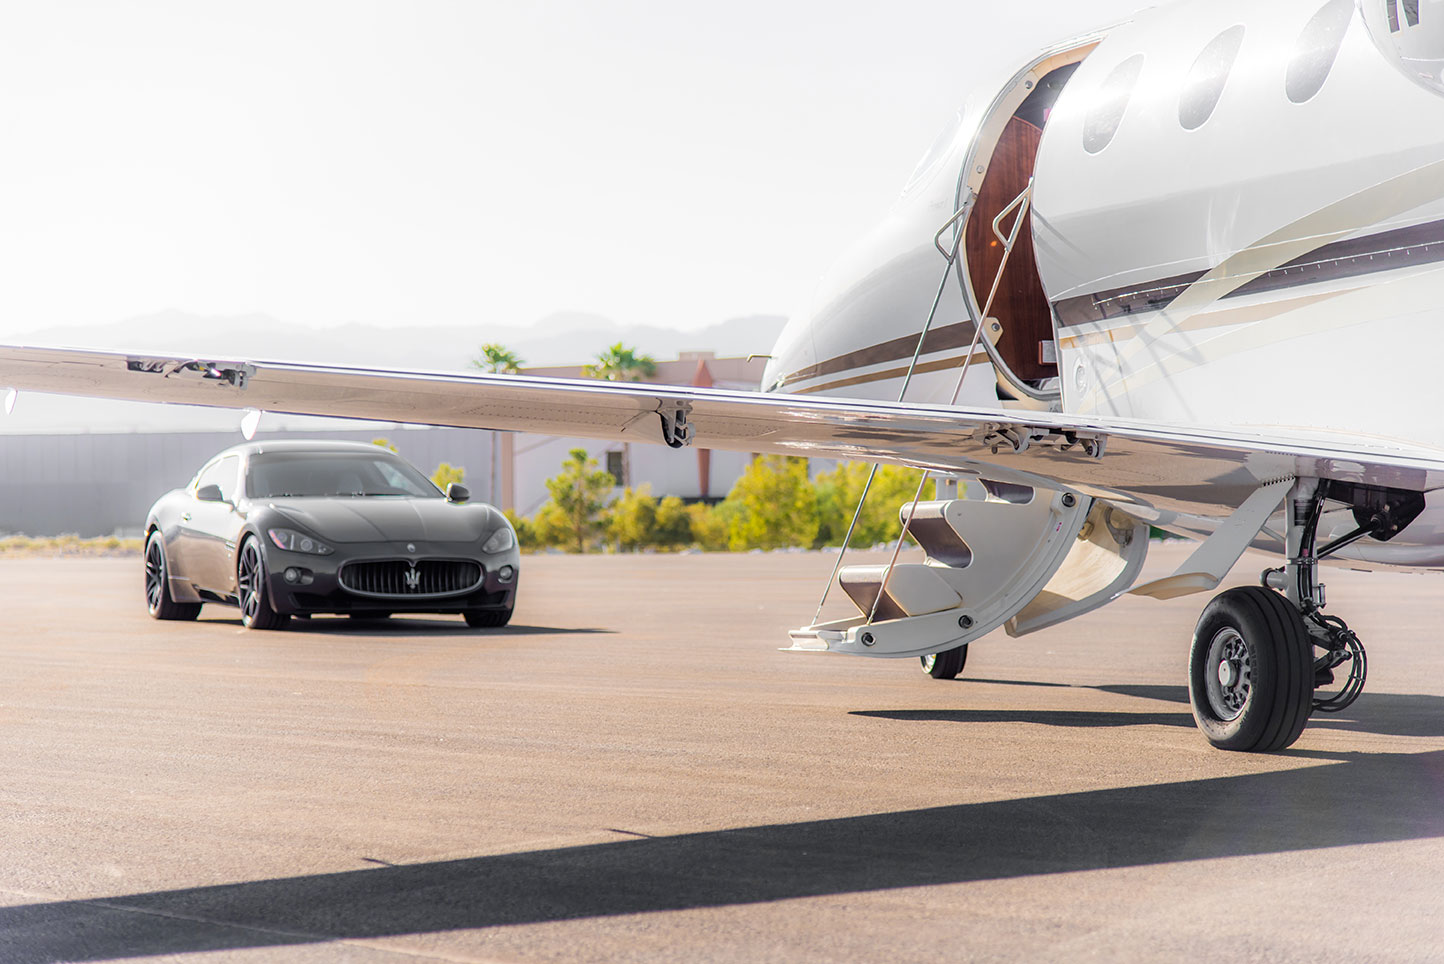 Maserati, Exotic Car, Private Jet, Photoshoot, Automobile, Adventure Lifestyle Photographer, Daniel Britton